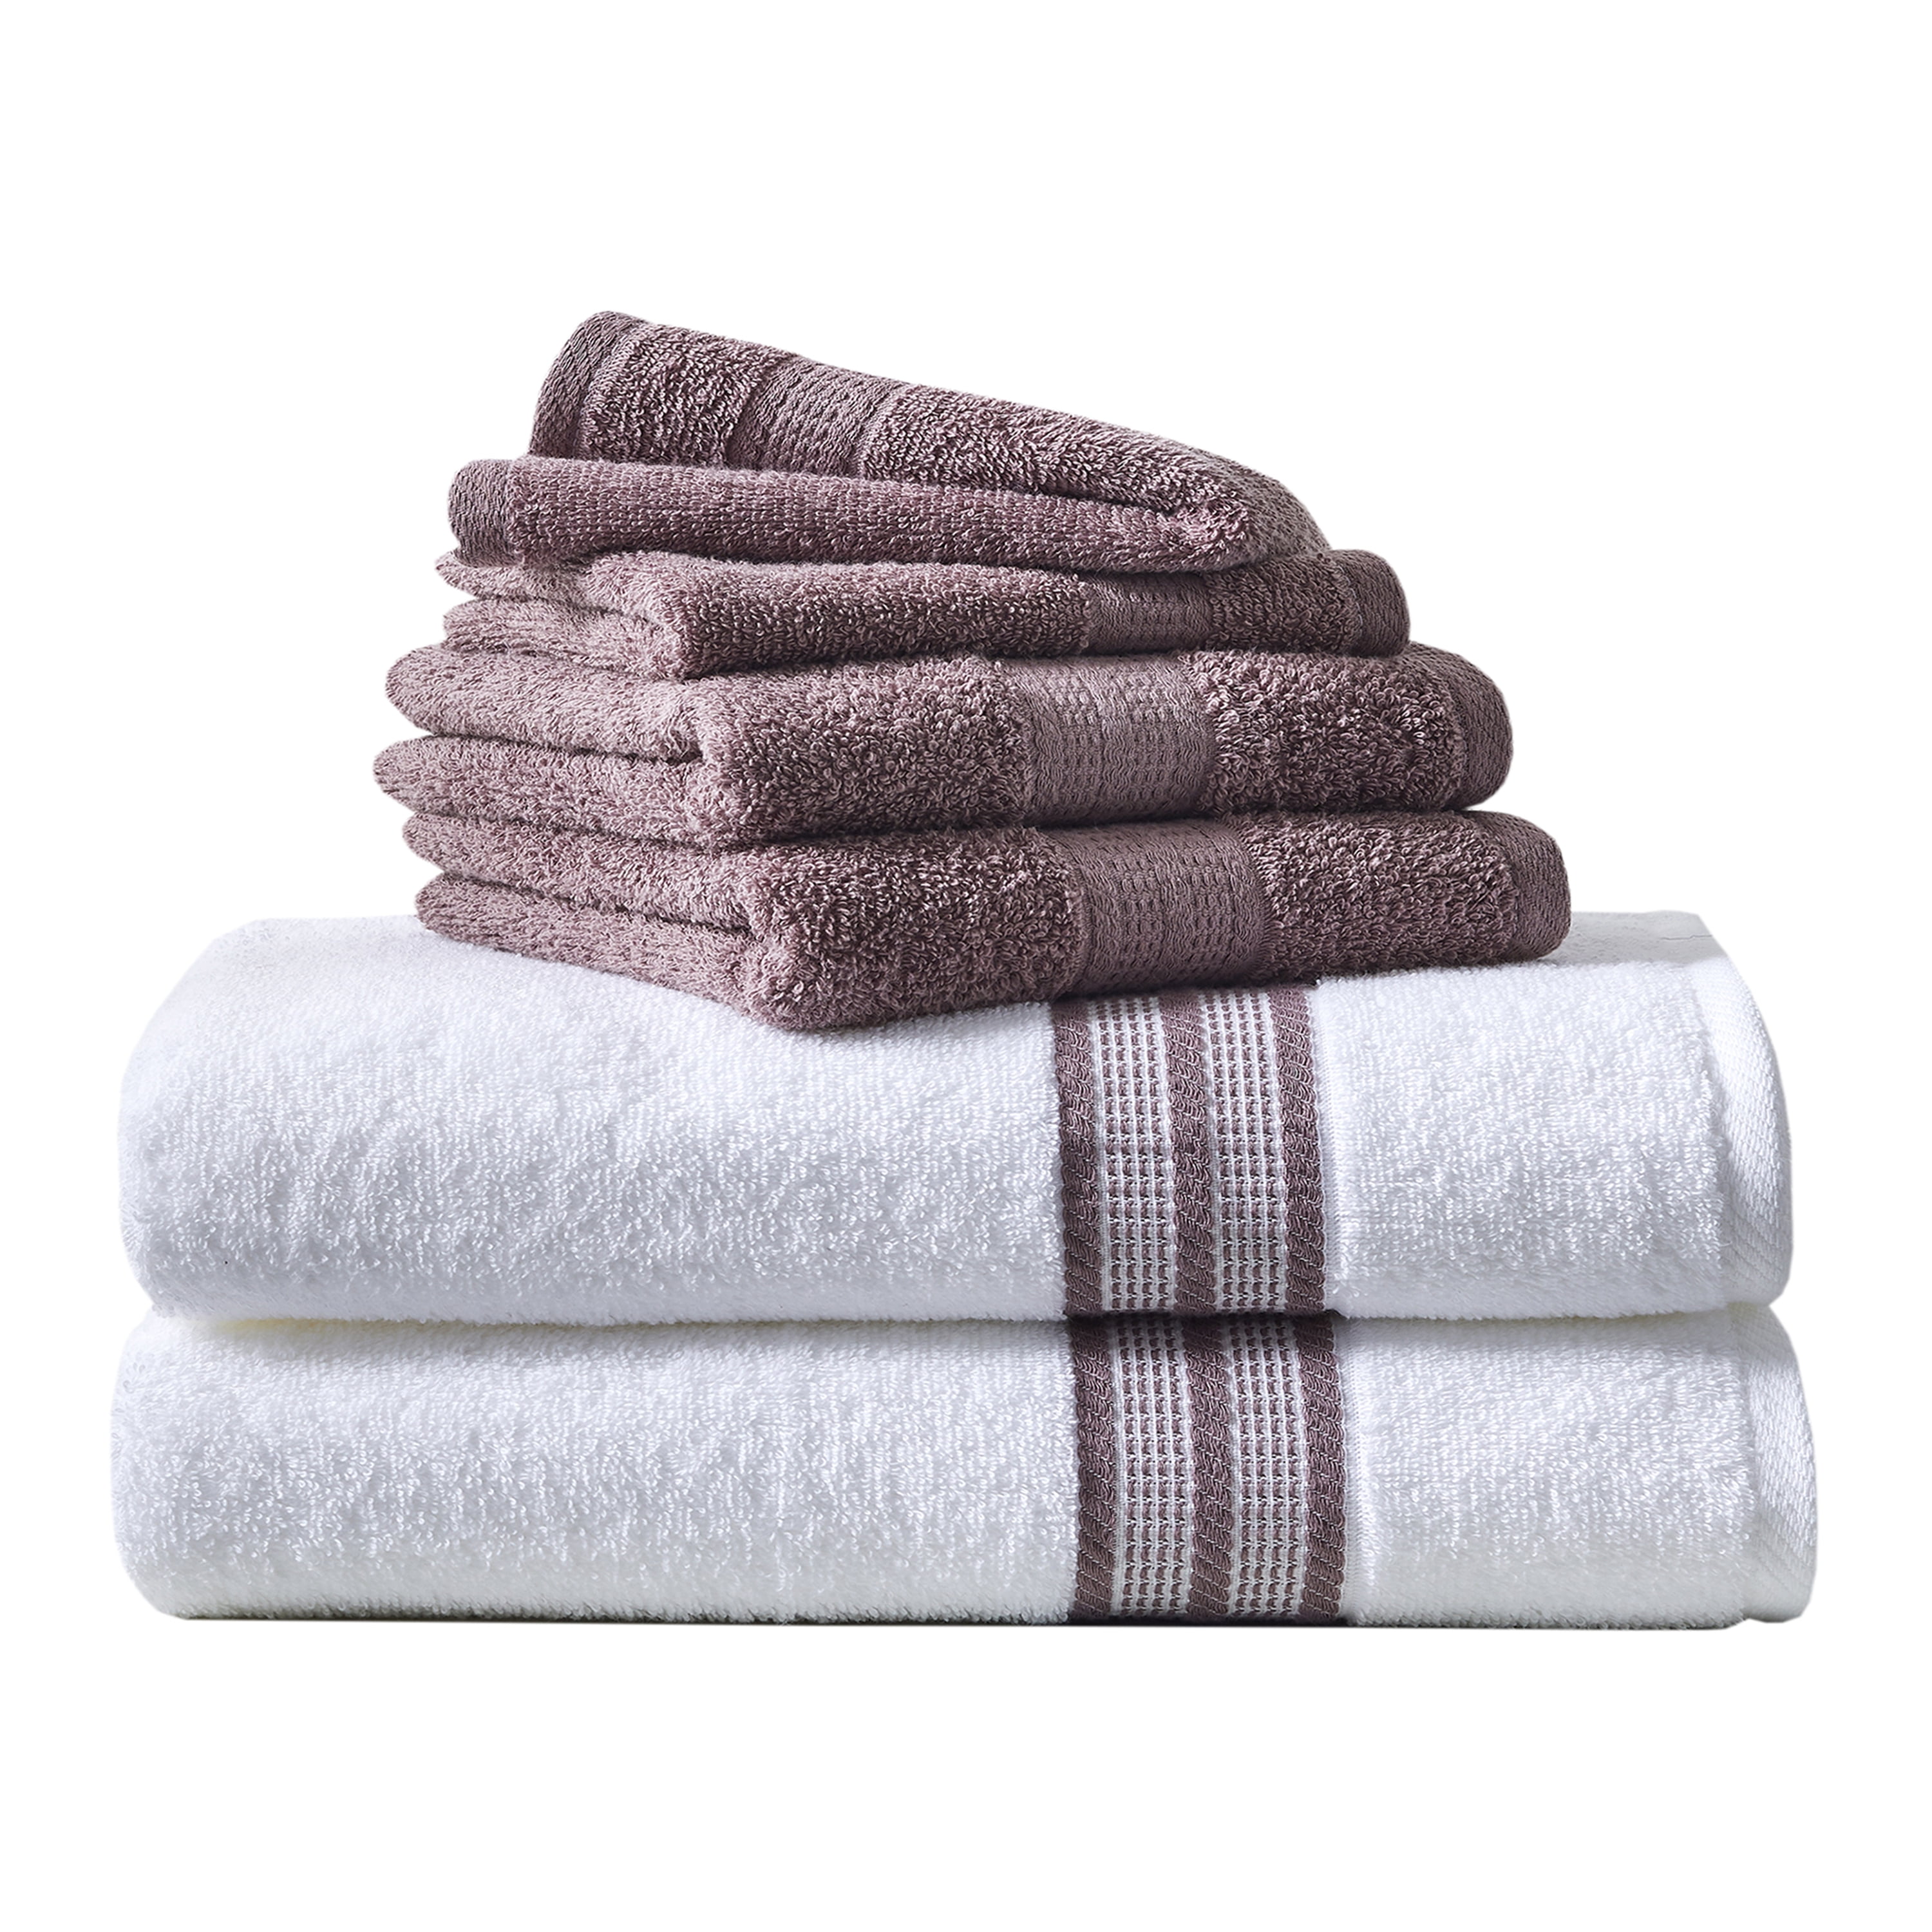 Cotton Craft Towels - Towel Distributors in Georgia - Cotton Craft